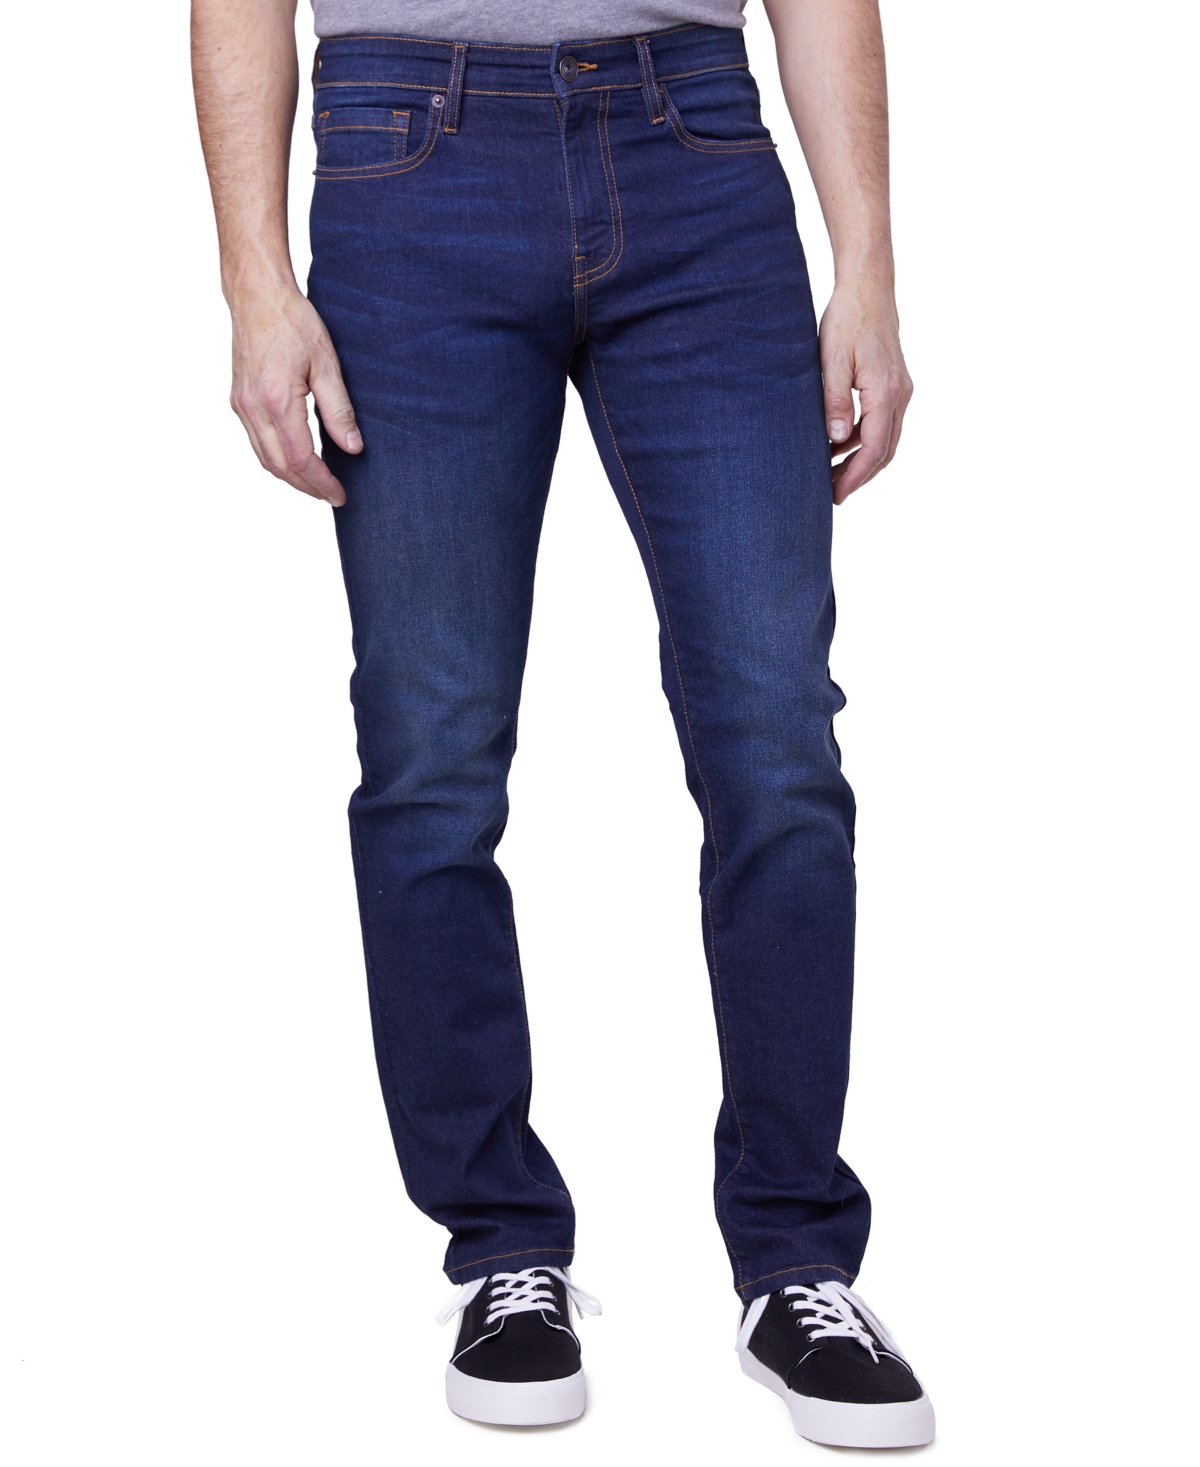 Men's Skinny Fit Stretch Jeans - TIM